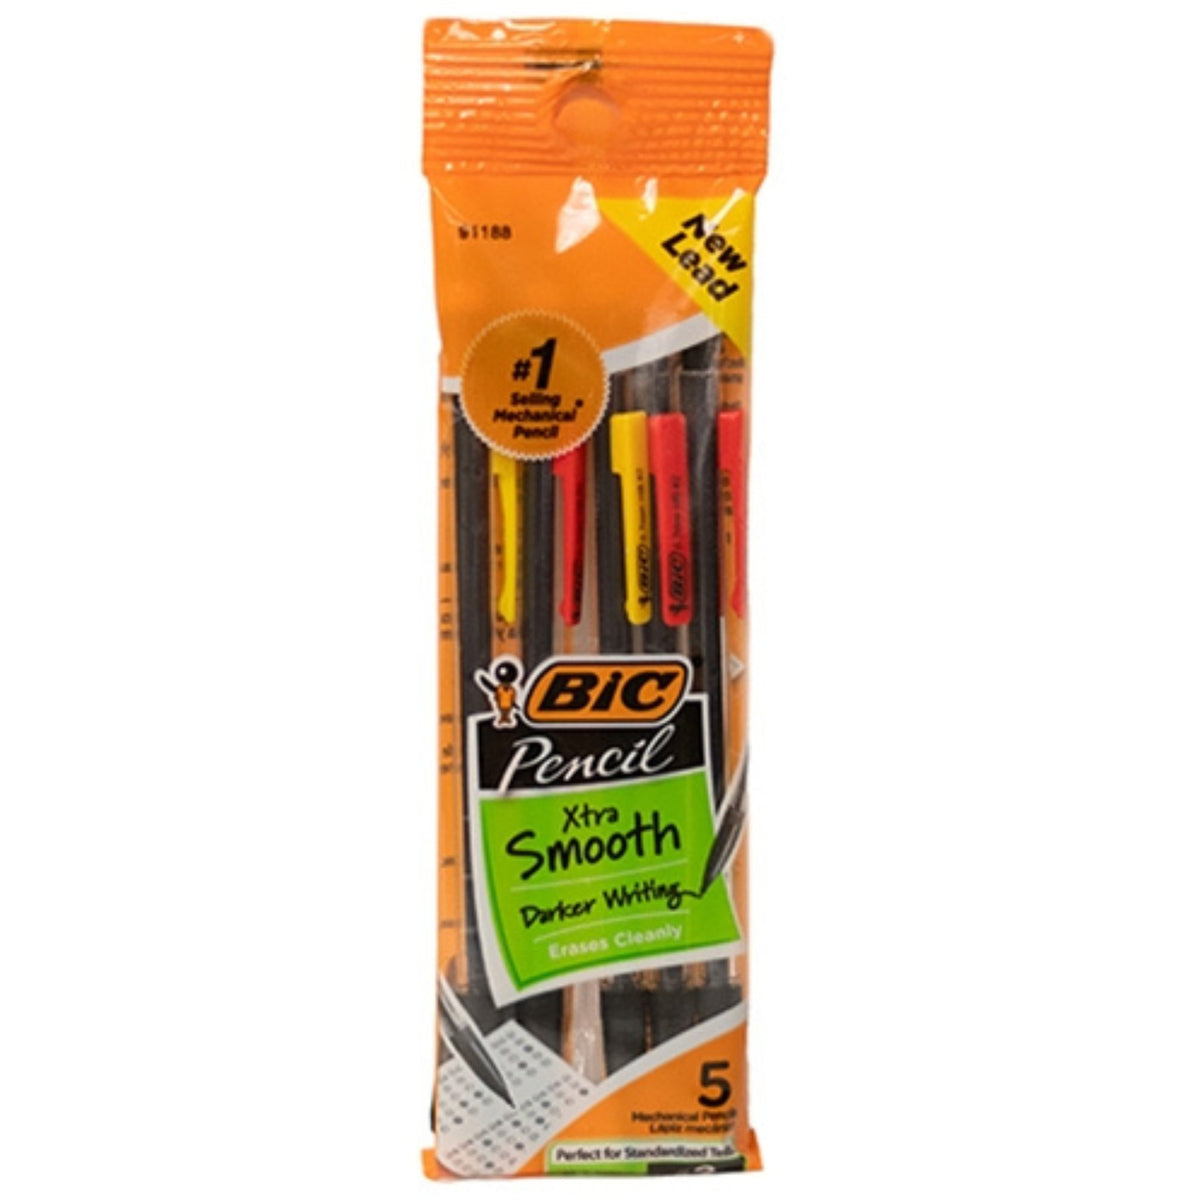 Bic Pencil Xtra Smooth